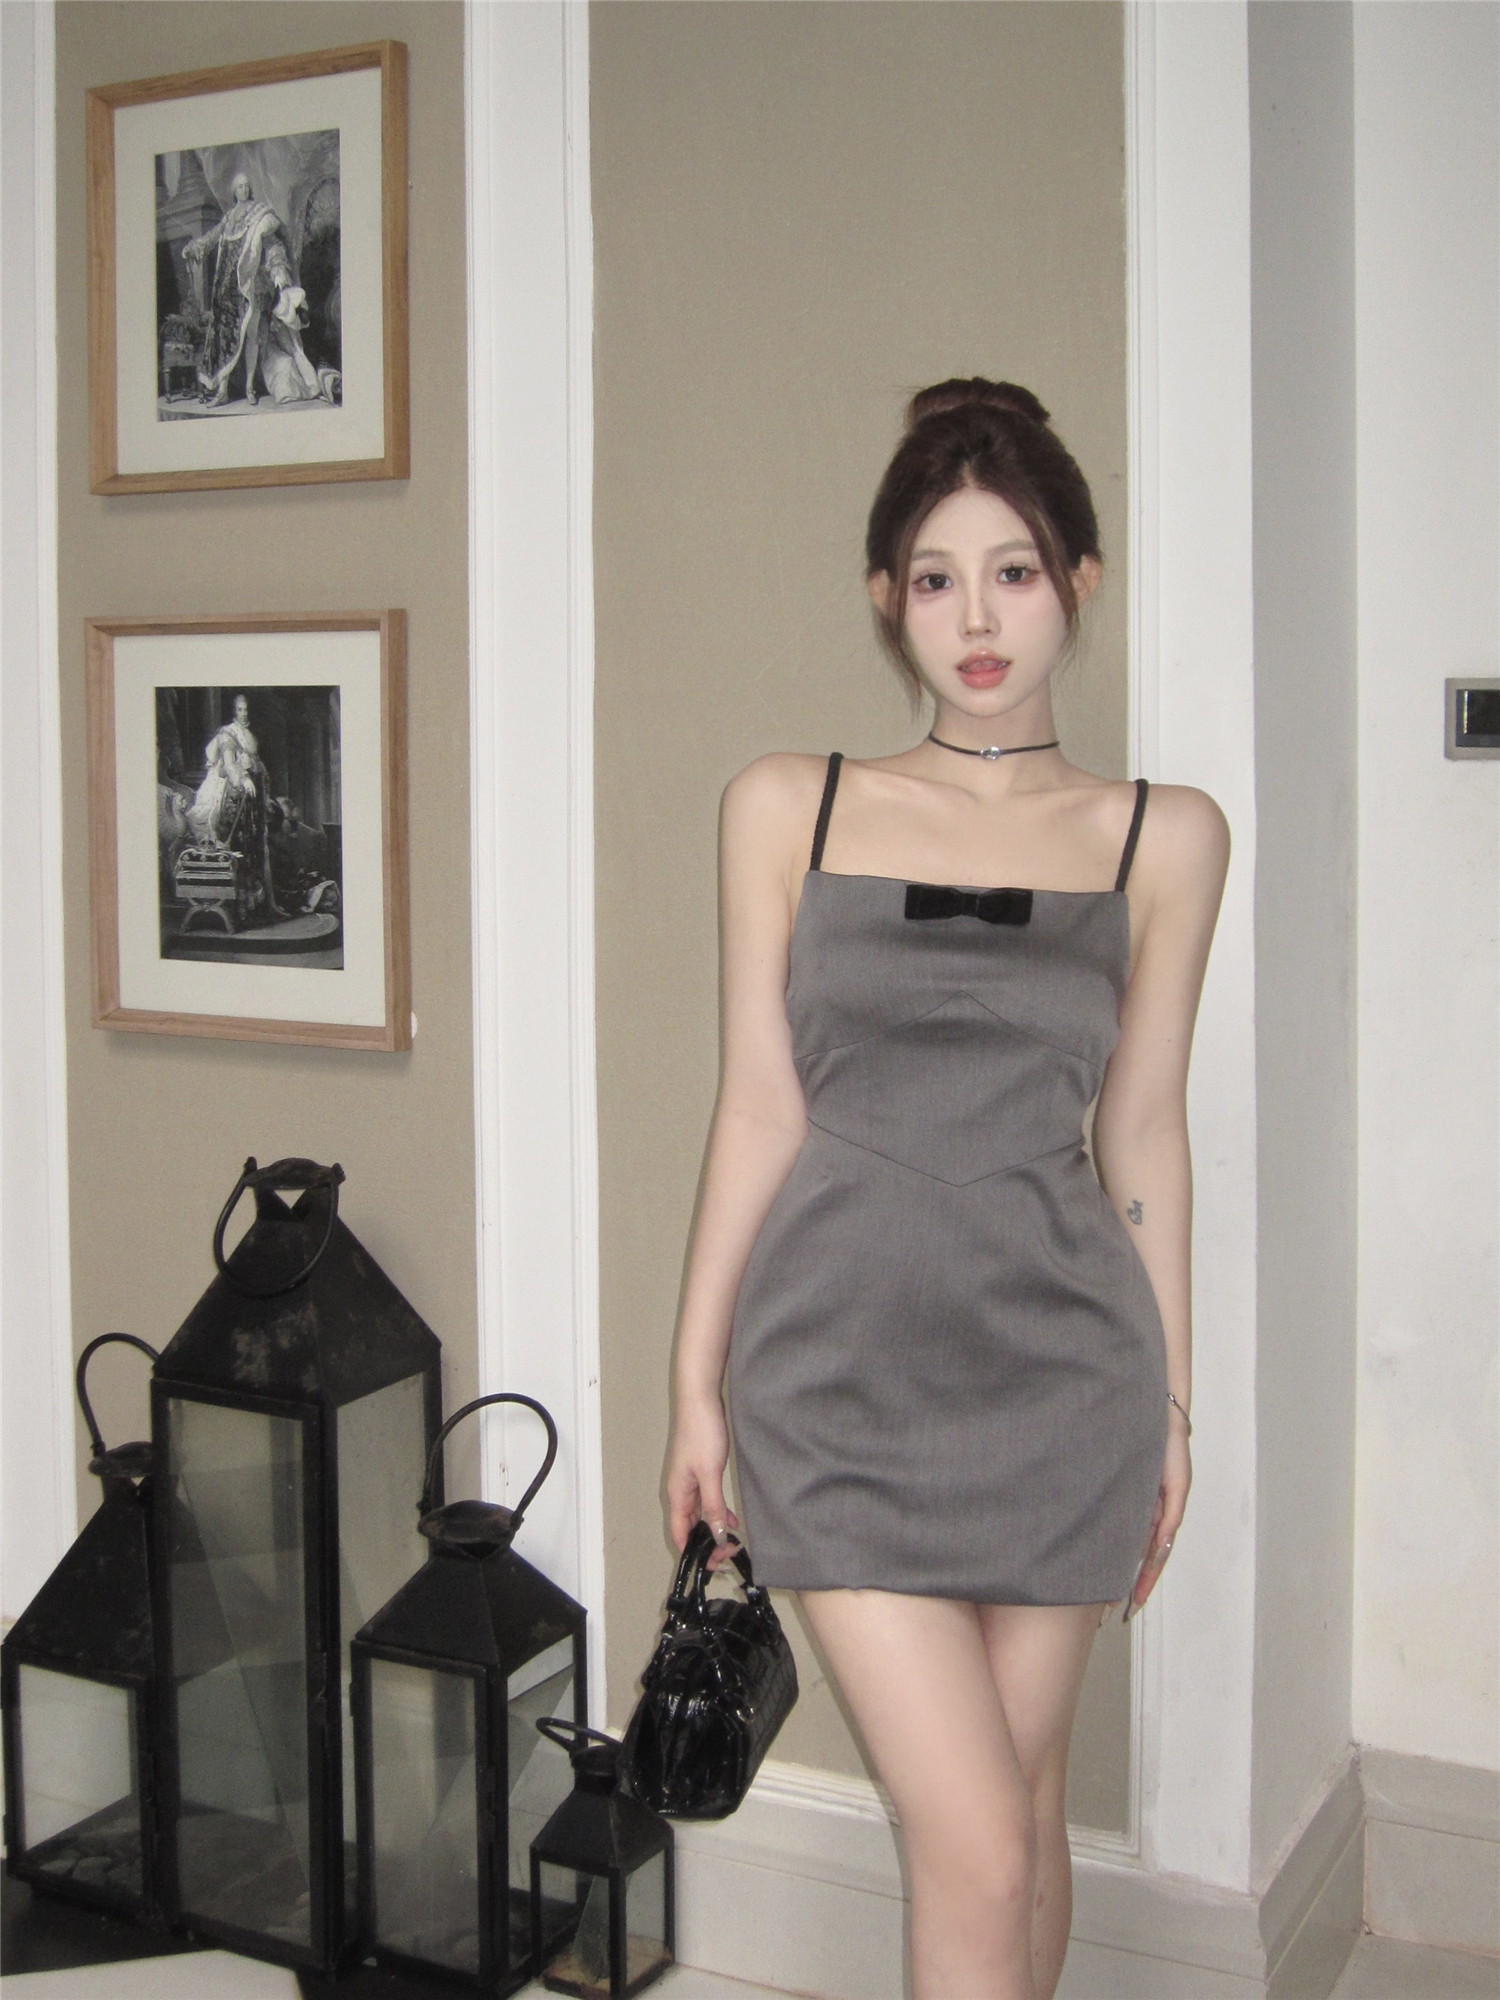 Actual shot~Korean comic senior college style shirt and suspender skirt suit